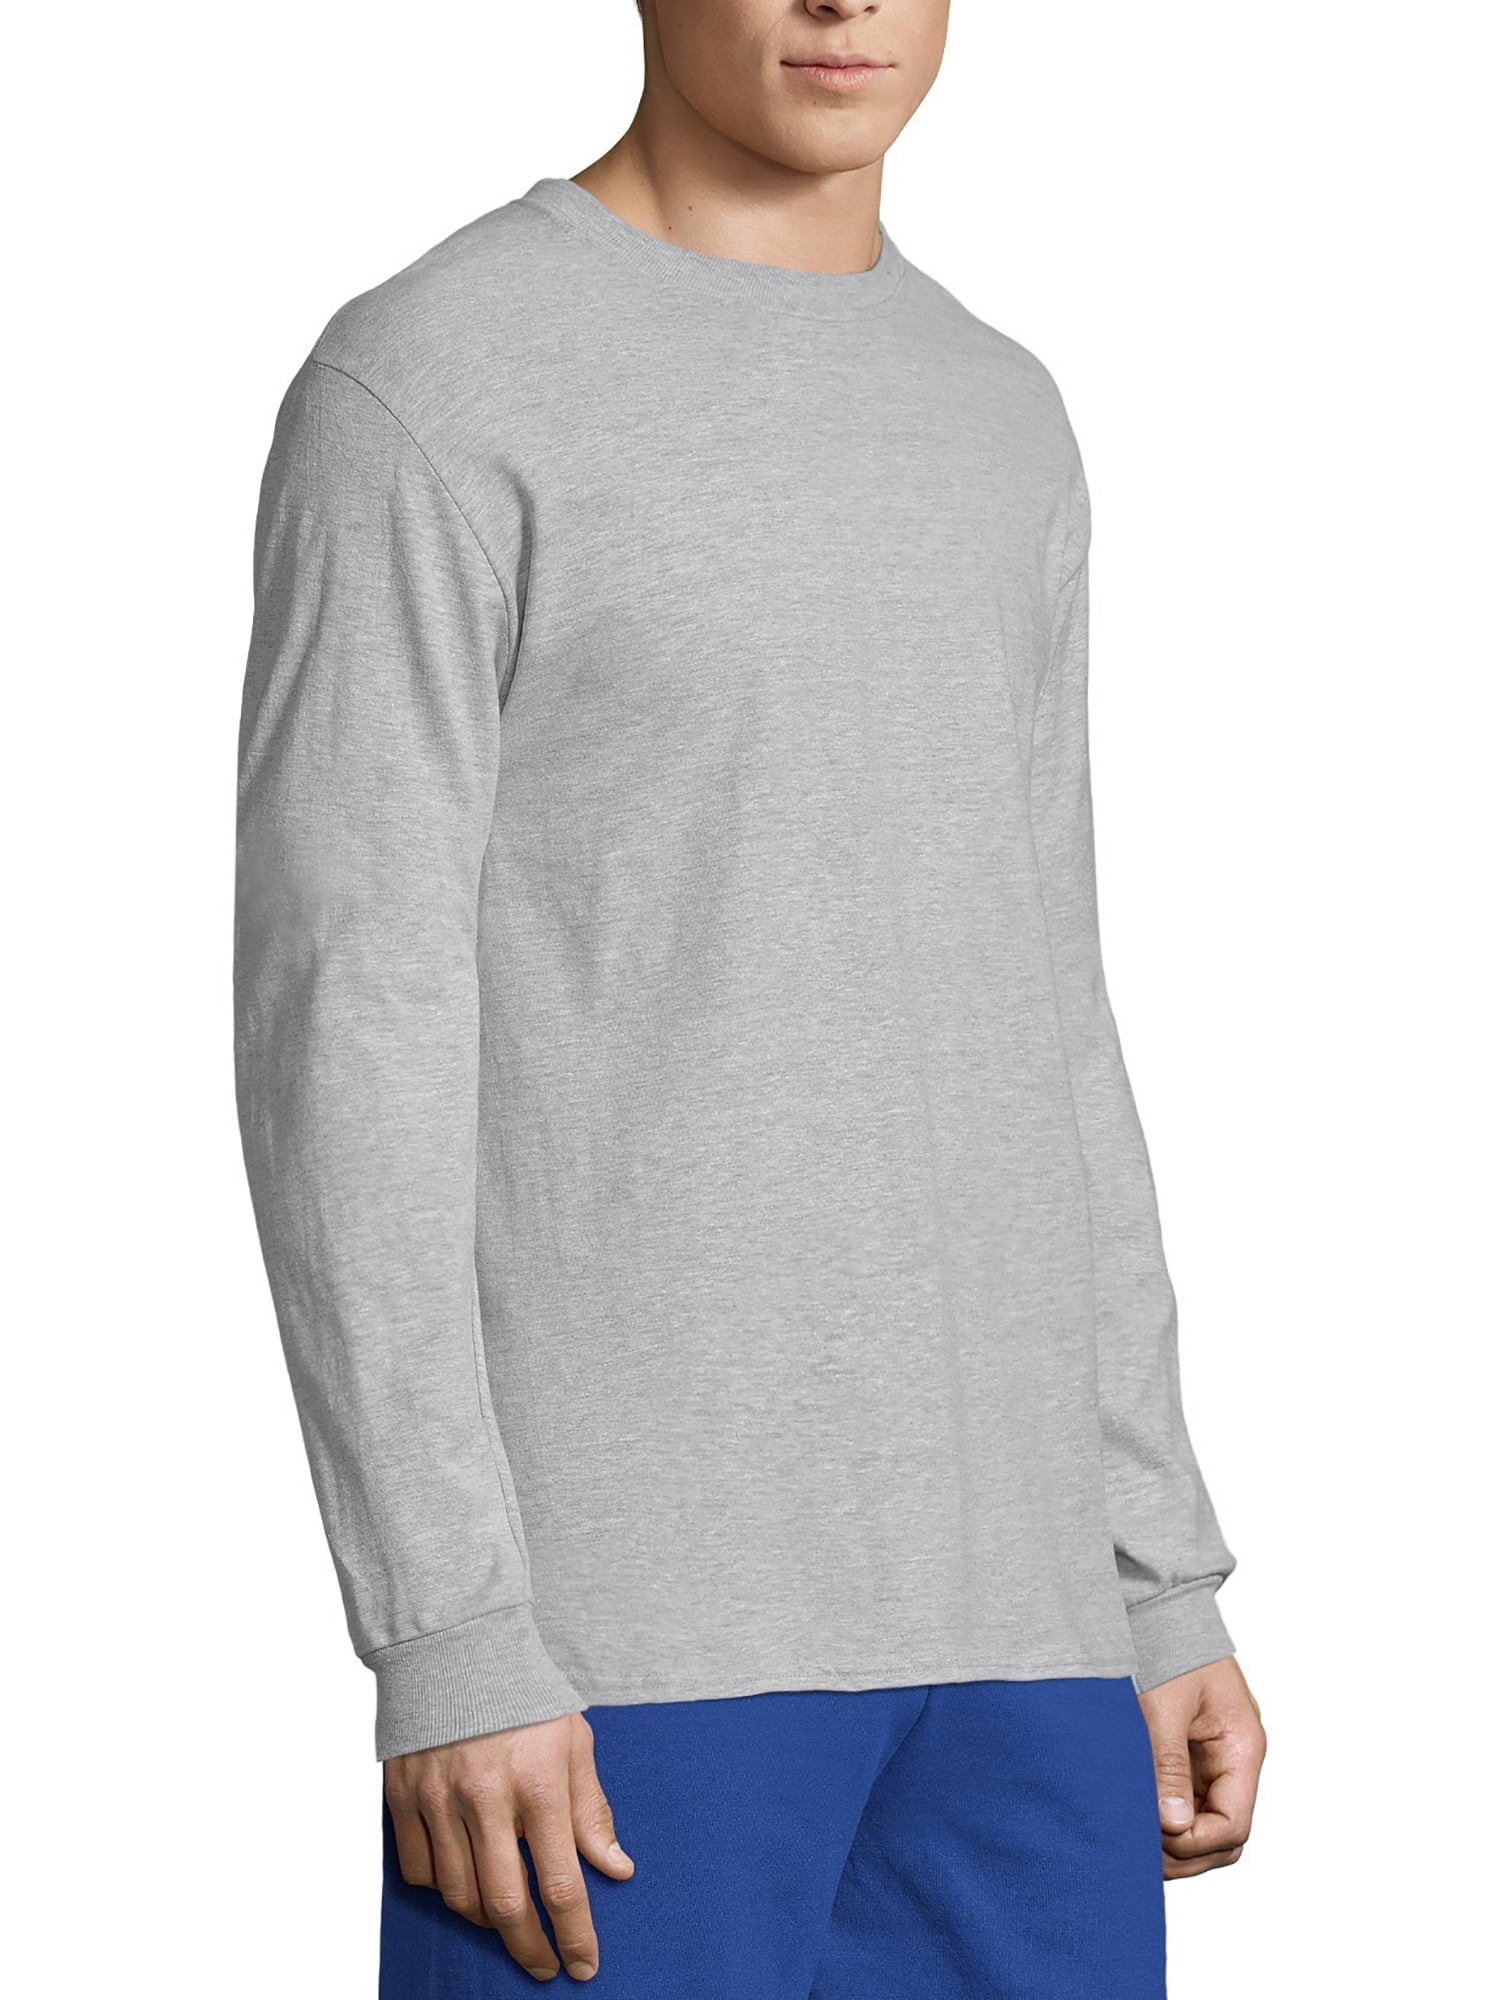 Men's Big & Tall Long Sleeve T-Shirt - Original Use™ White 4XL